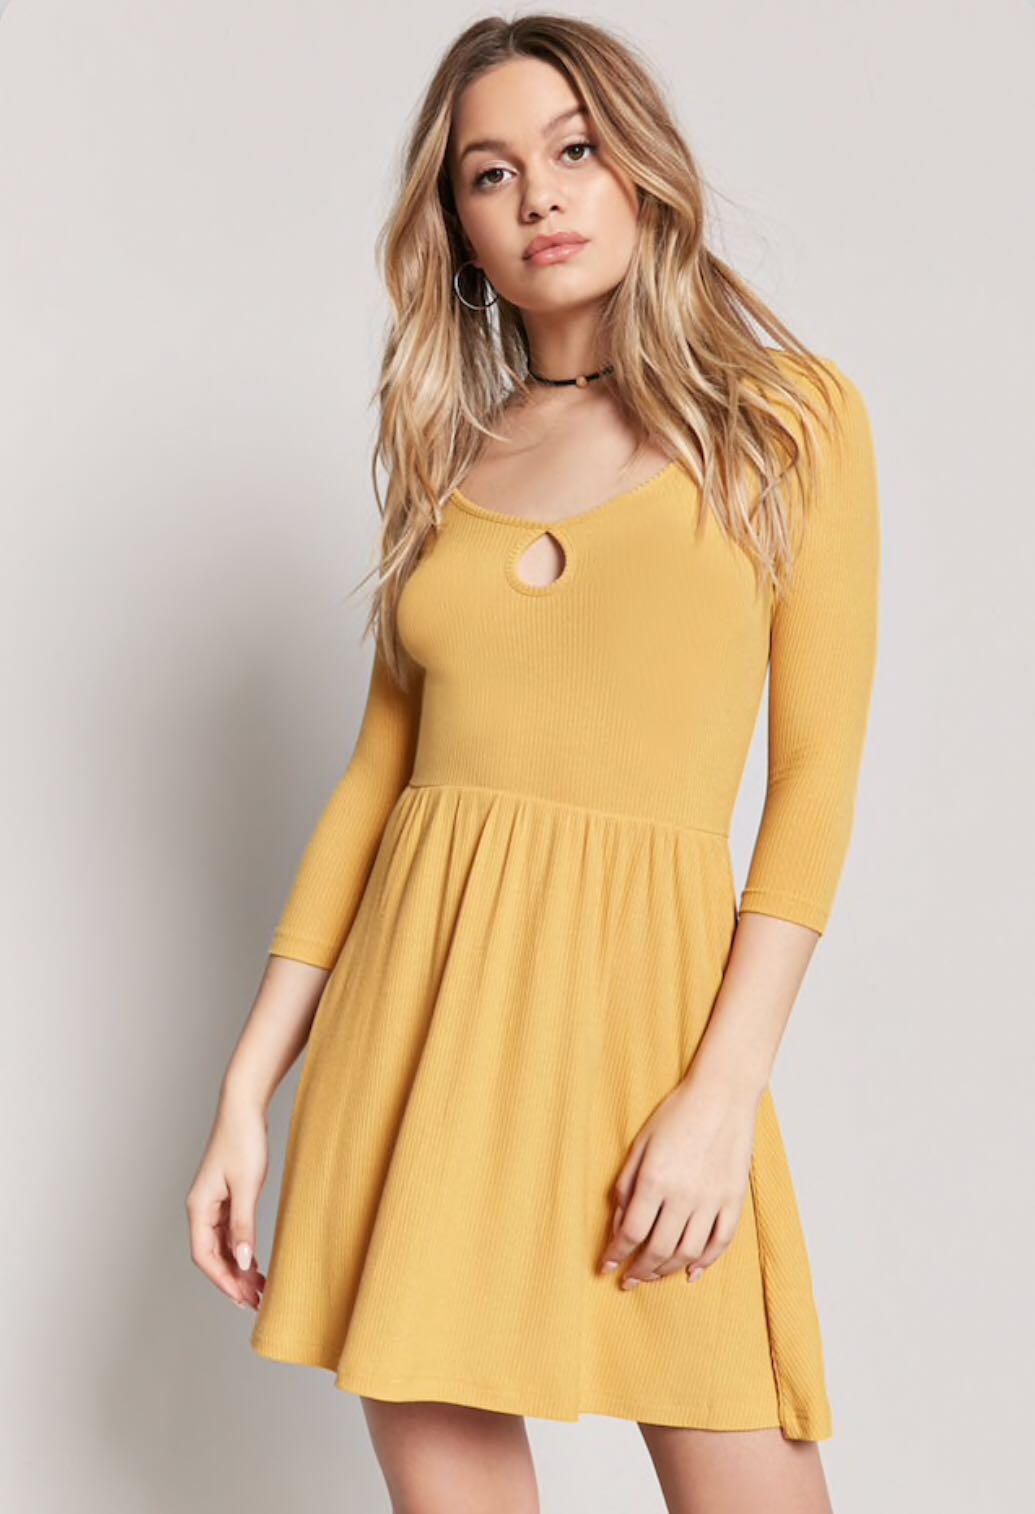 mustard yellow dress forever 21